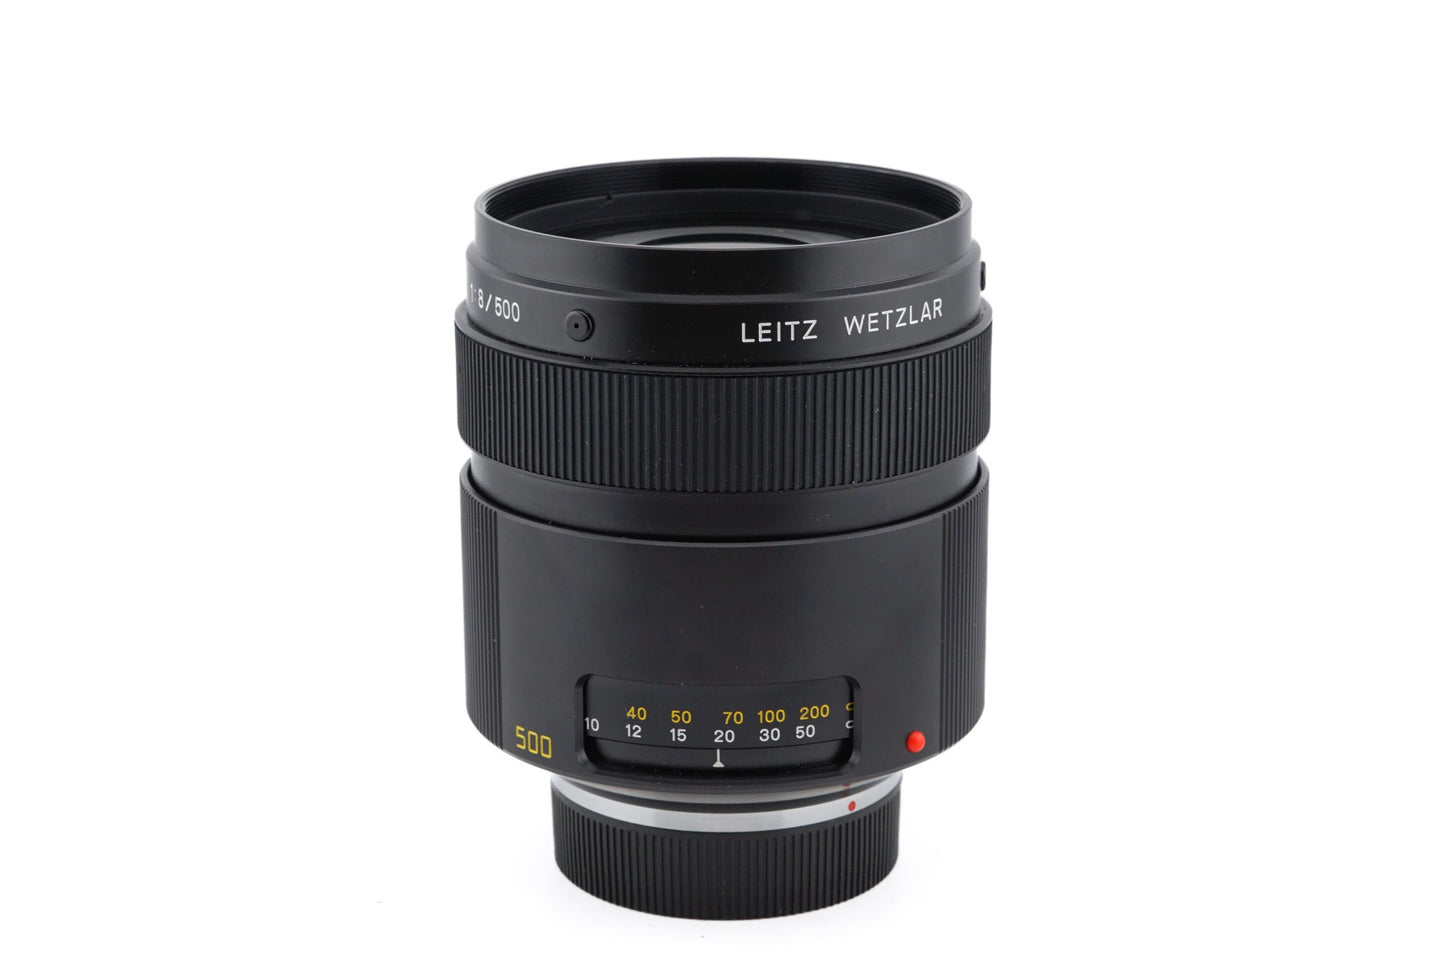 Leica 500mm f8 MR-Telyt-R - Lens